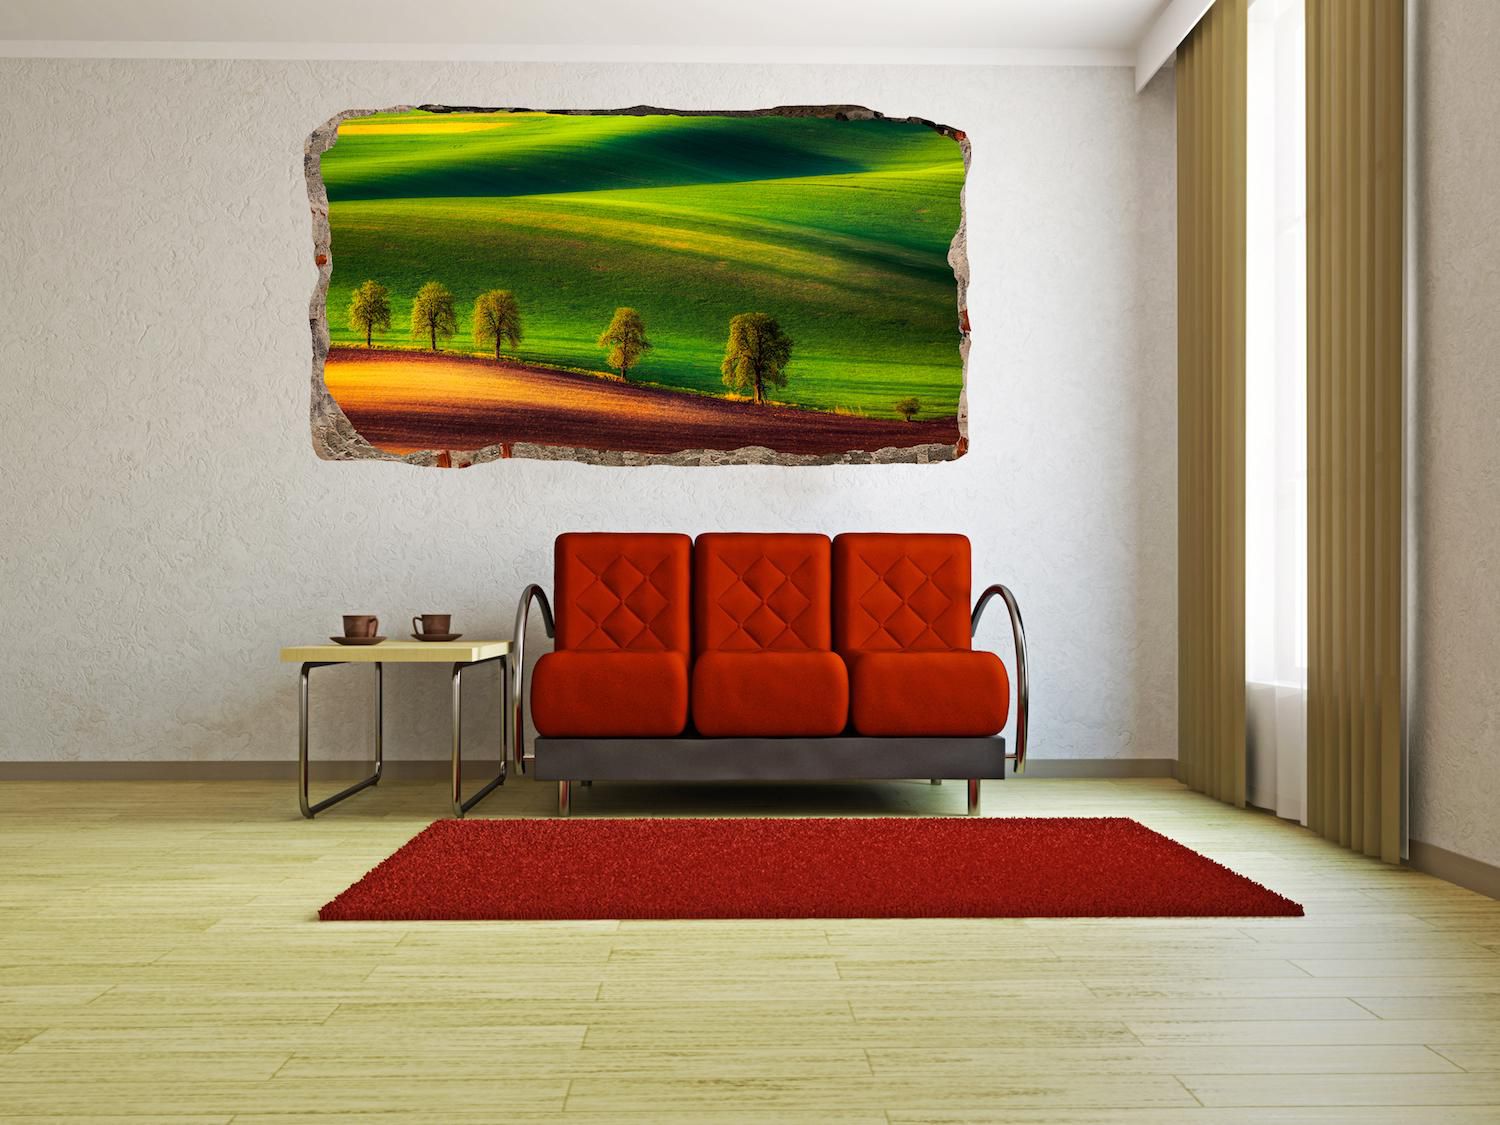 Startonight DualView 3D Mural Wall Art Photo Decor Country Green 120 x 220 cm Landscape Collection Wall Art